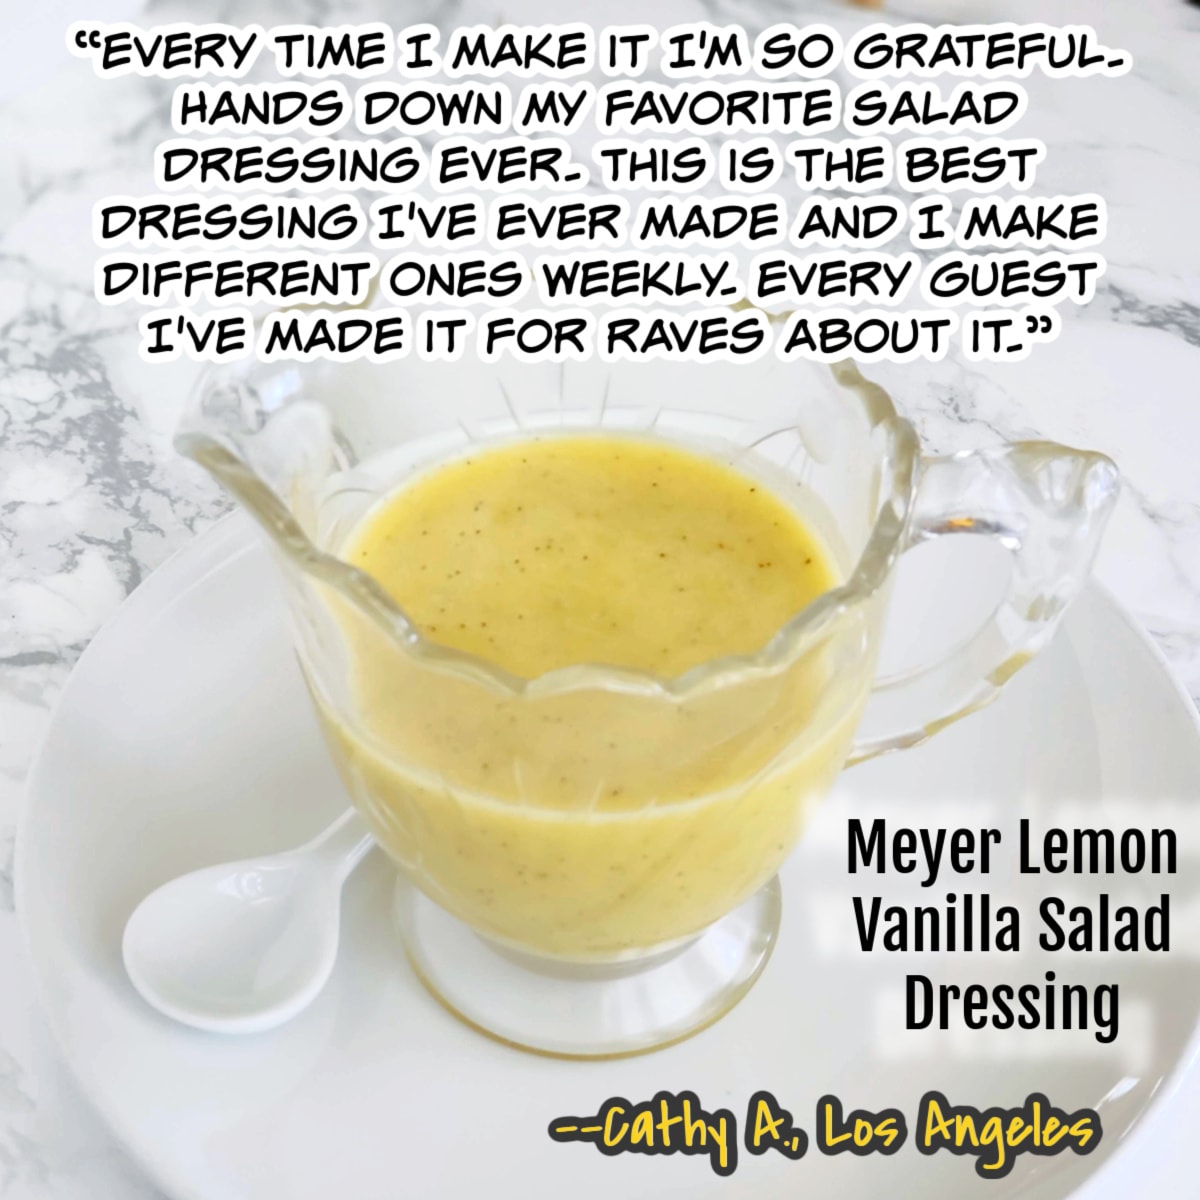 Reader rave superimposed on cut glass pitcher of Meyer Lemon Vanilla Salad Dressing